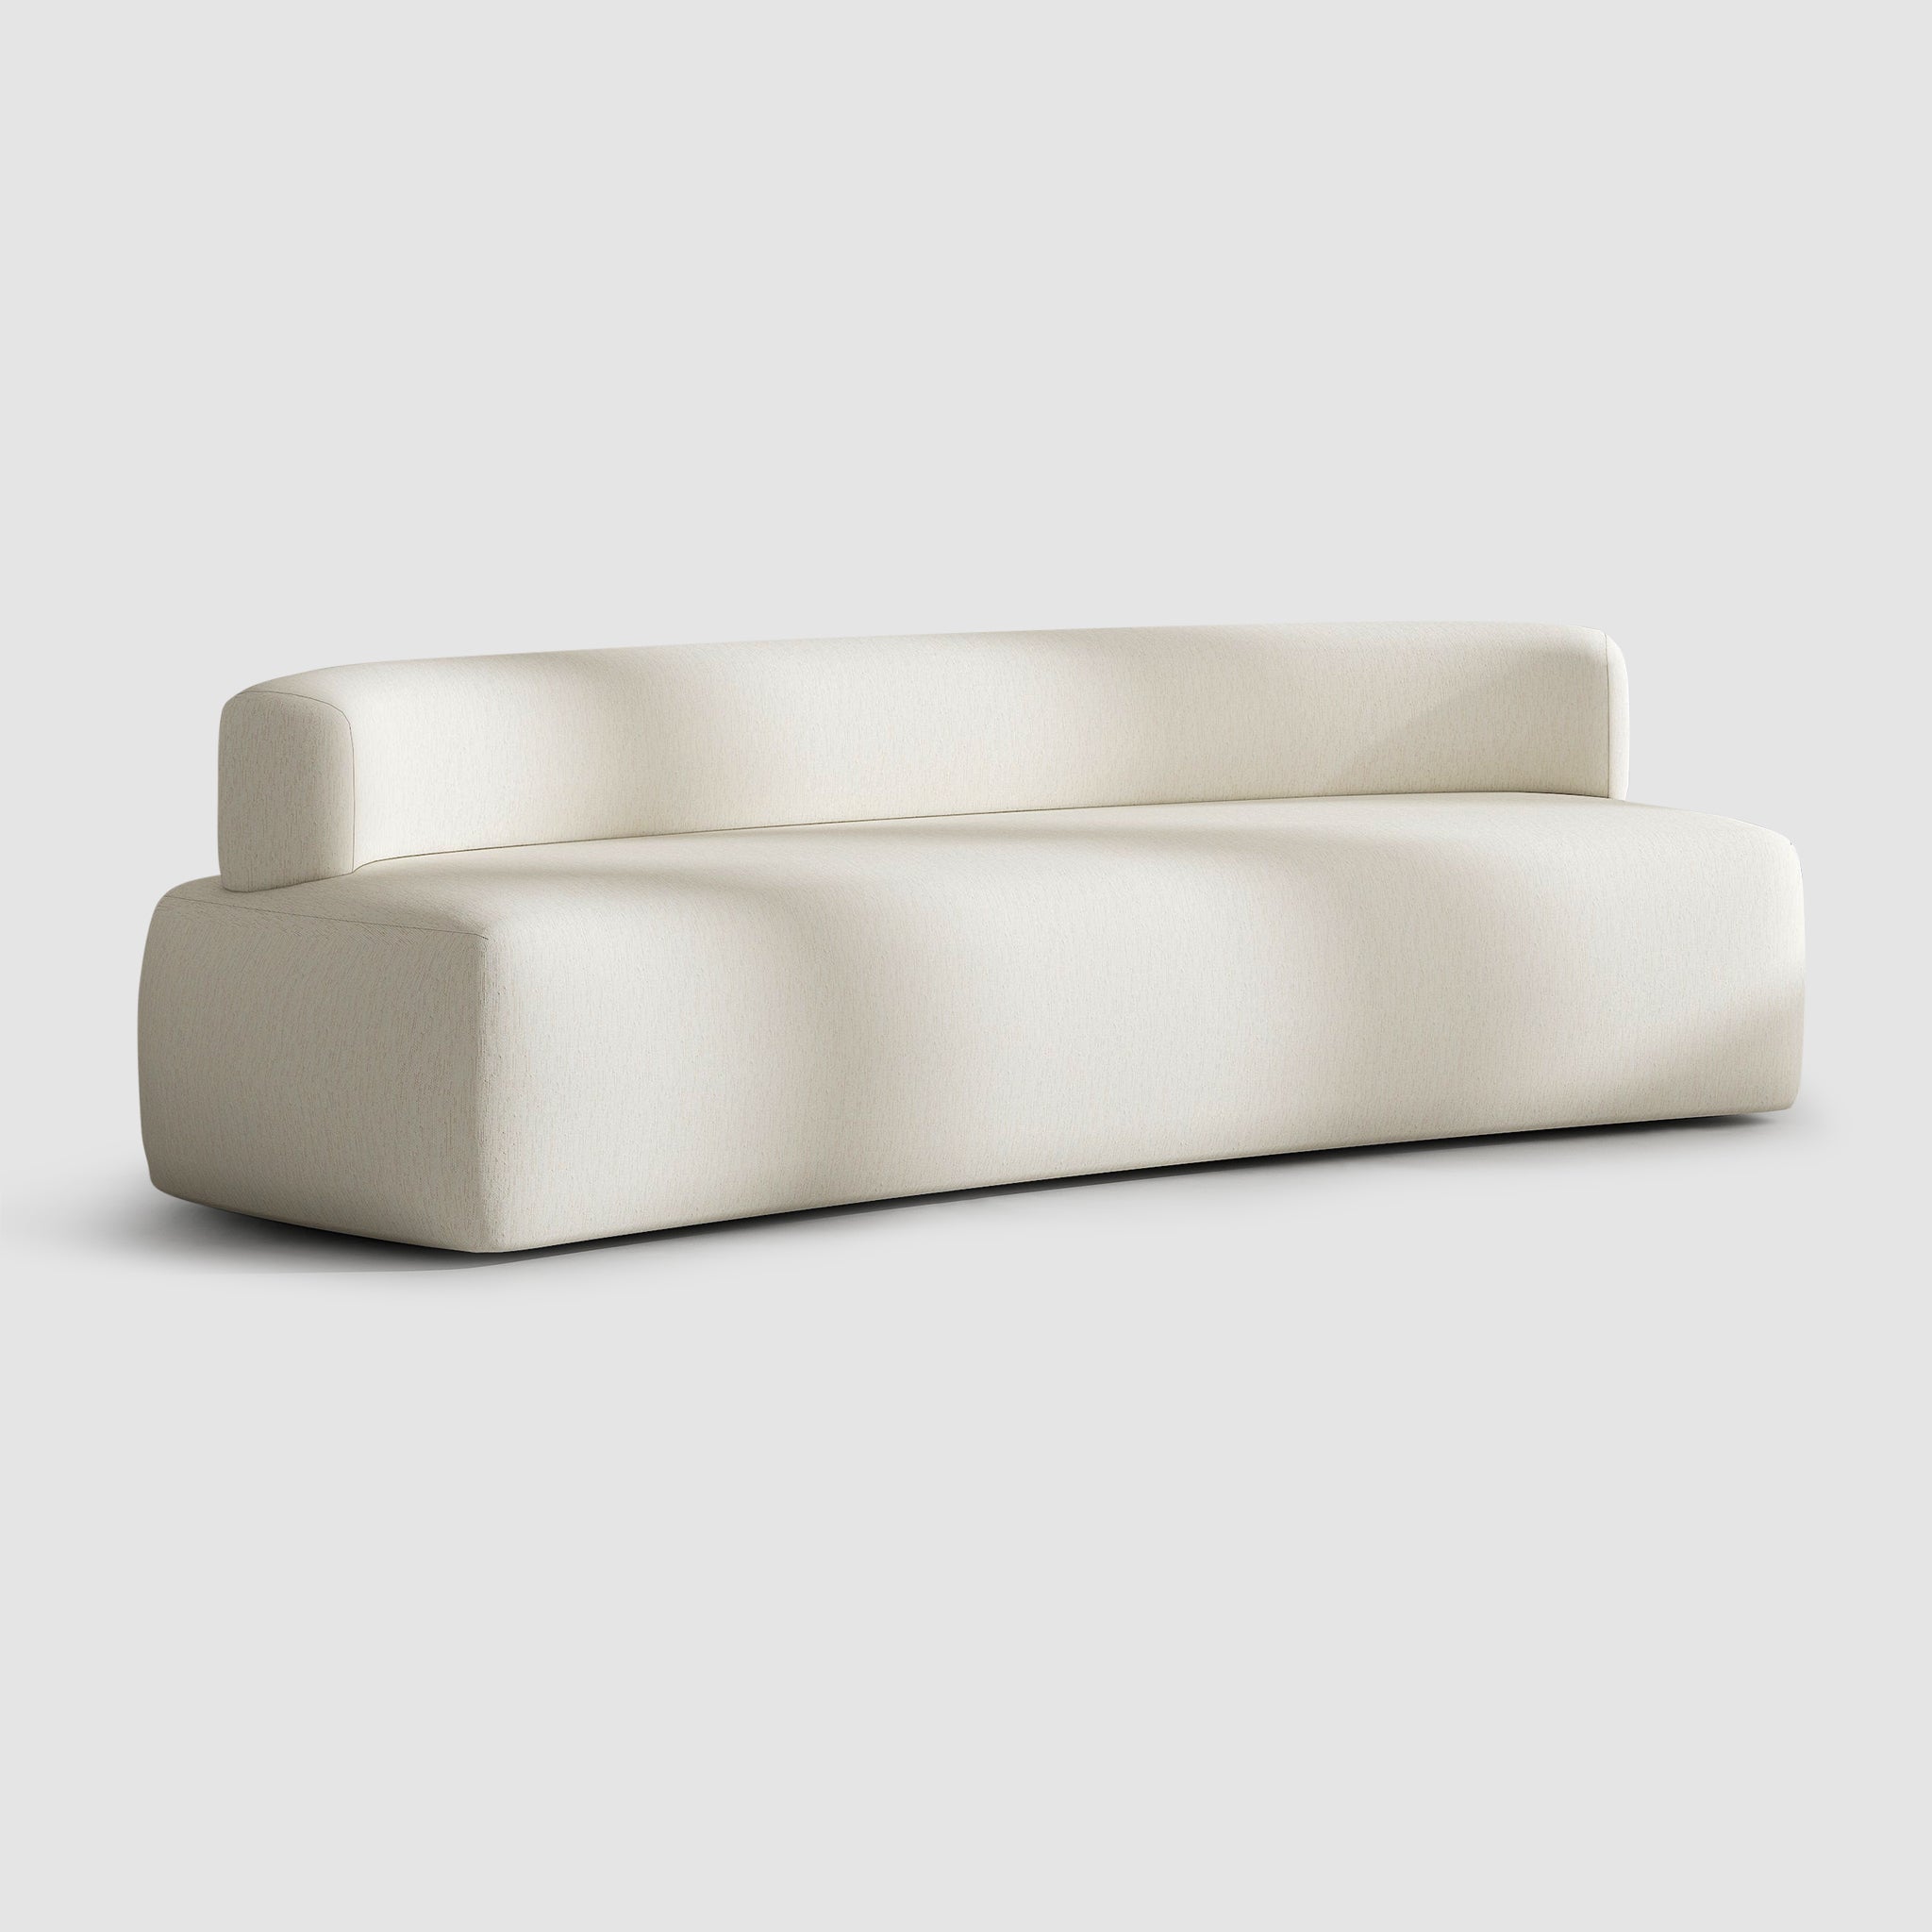 Minimalist modern white sofa with sleek design